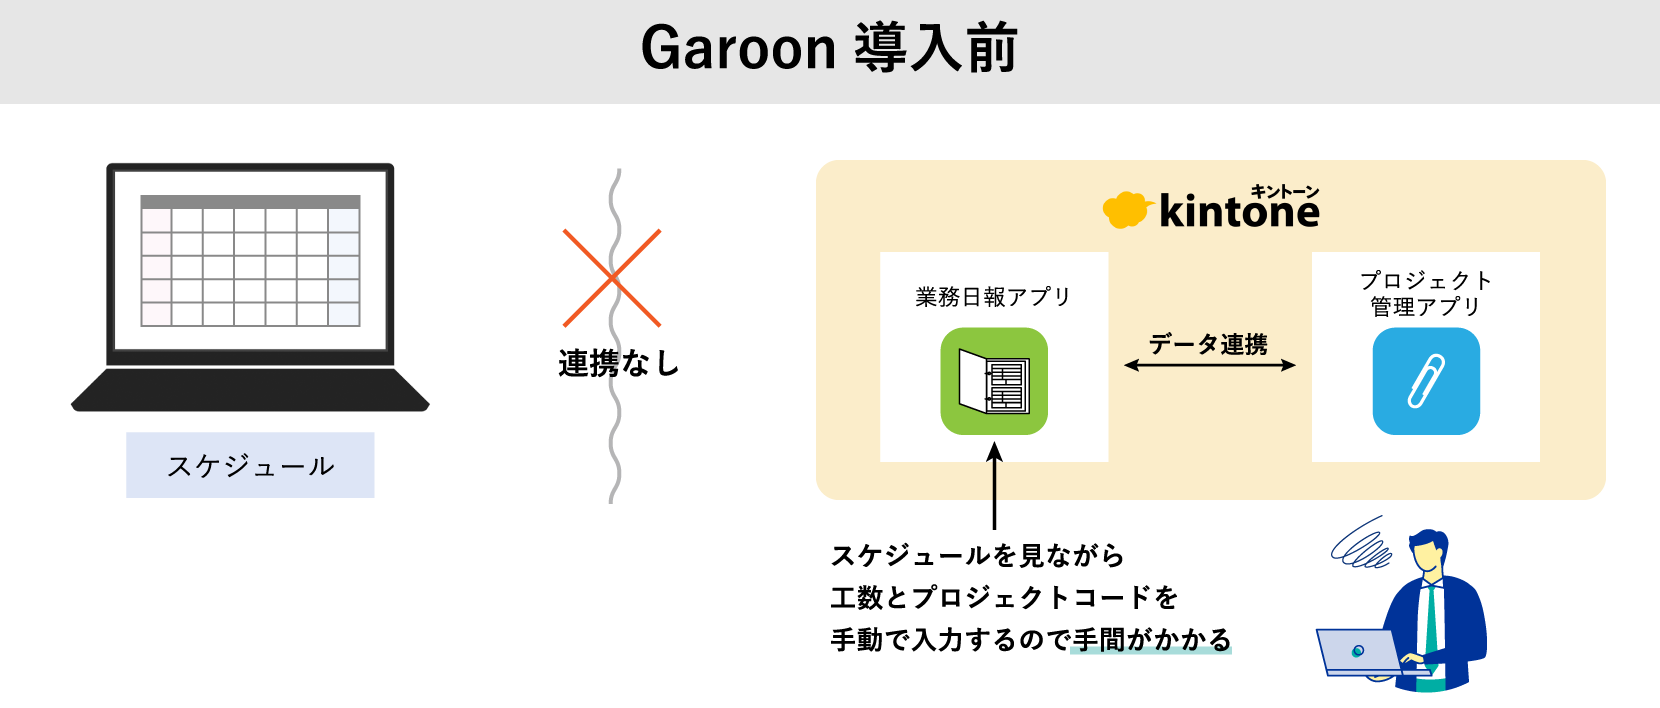 Garoon導入前の工数入力のイメージ